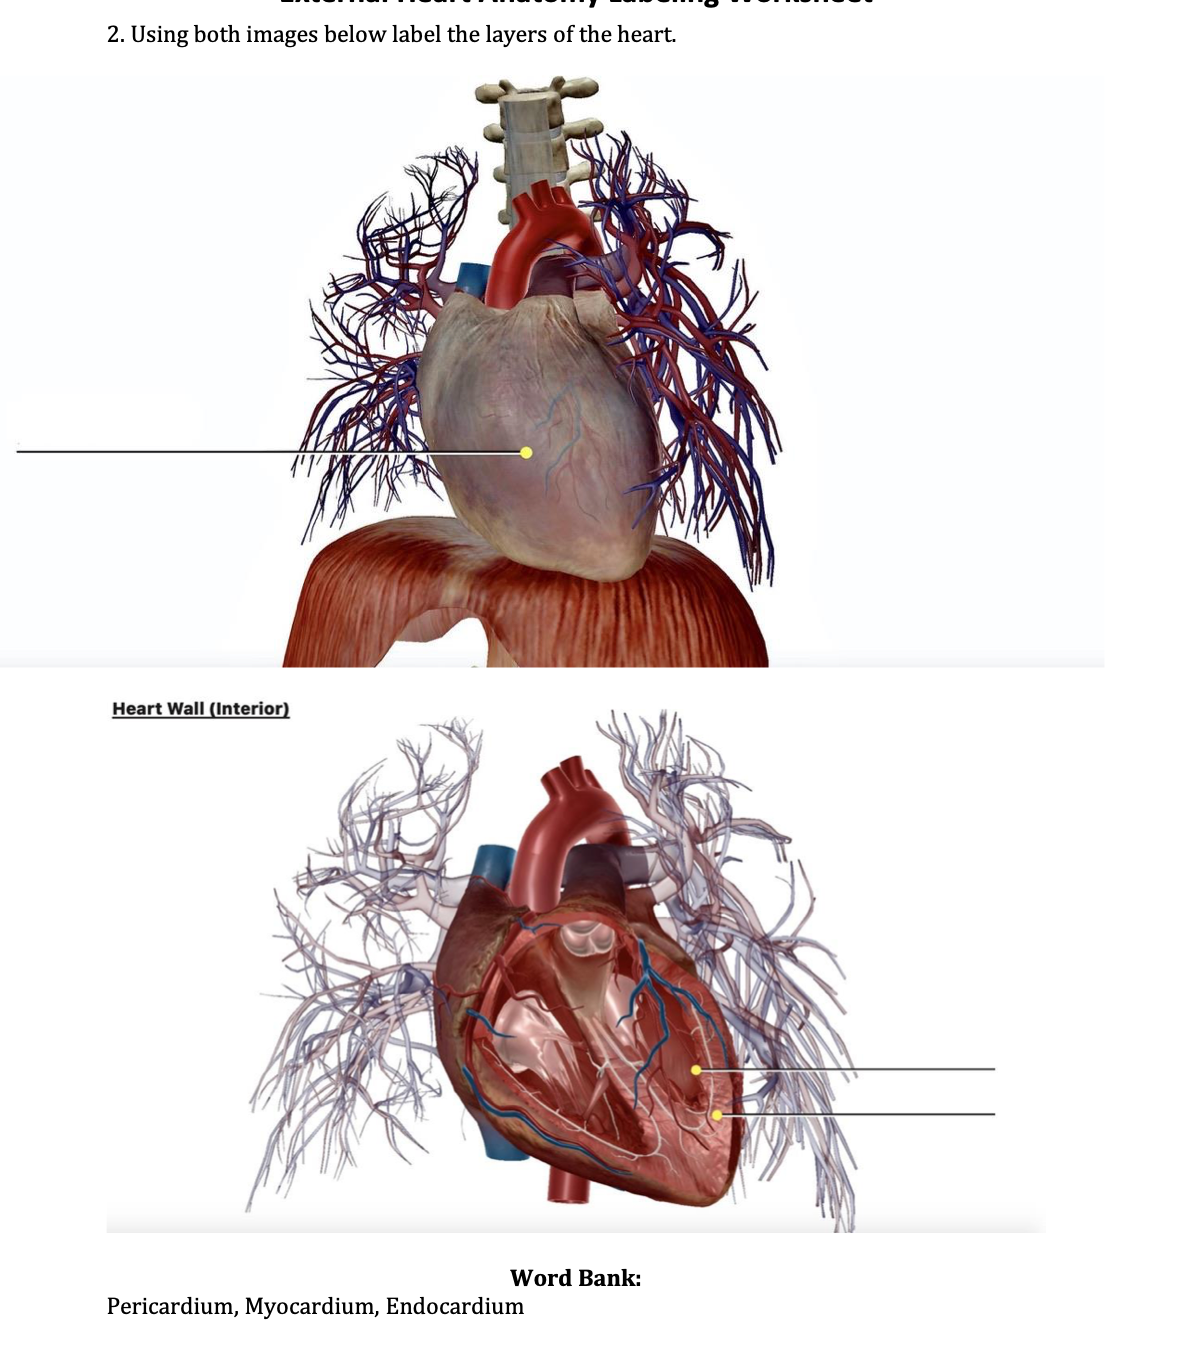 2. Using both images below label the layers of the heart.
Heart Wall (Interior)
Word Bank:
Pericardium, Myocardium, Endocardium
